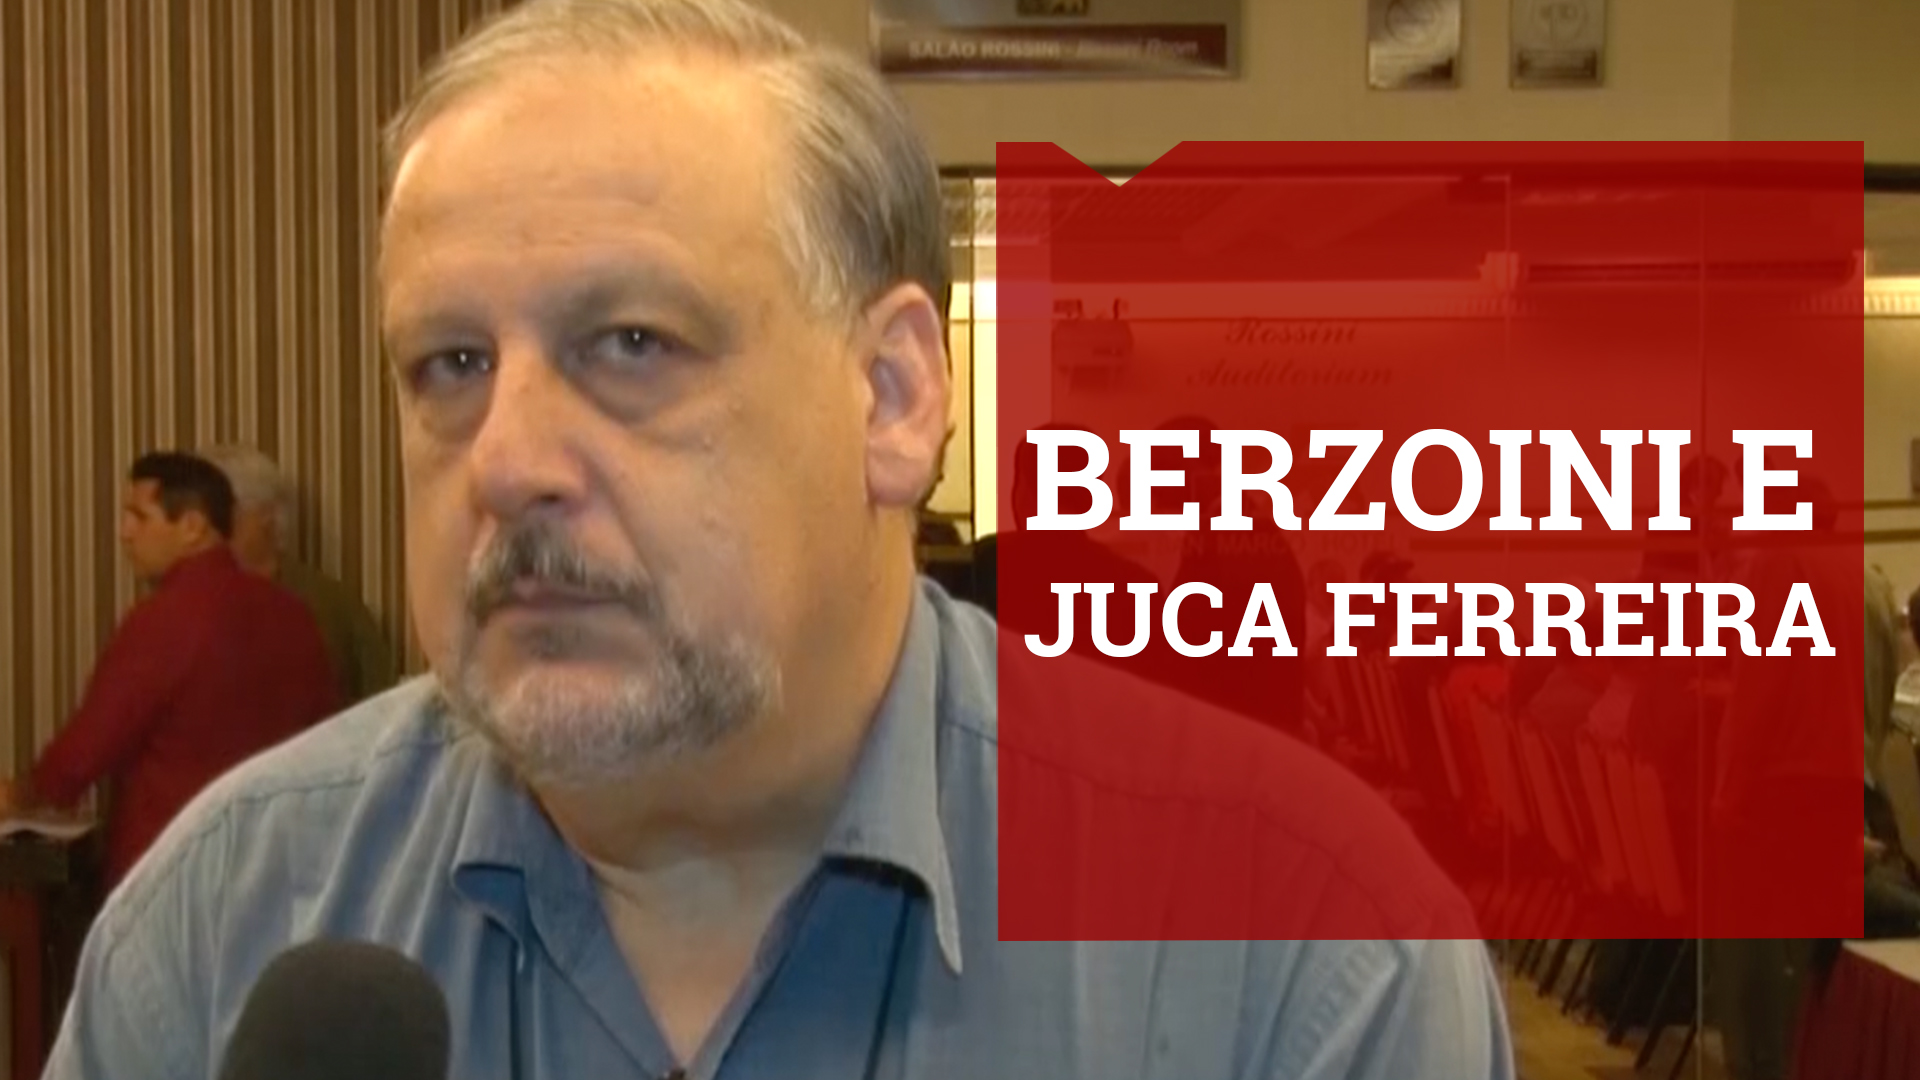 Ricardo Berzoini e Juca Ferreira criticam governo golpista